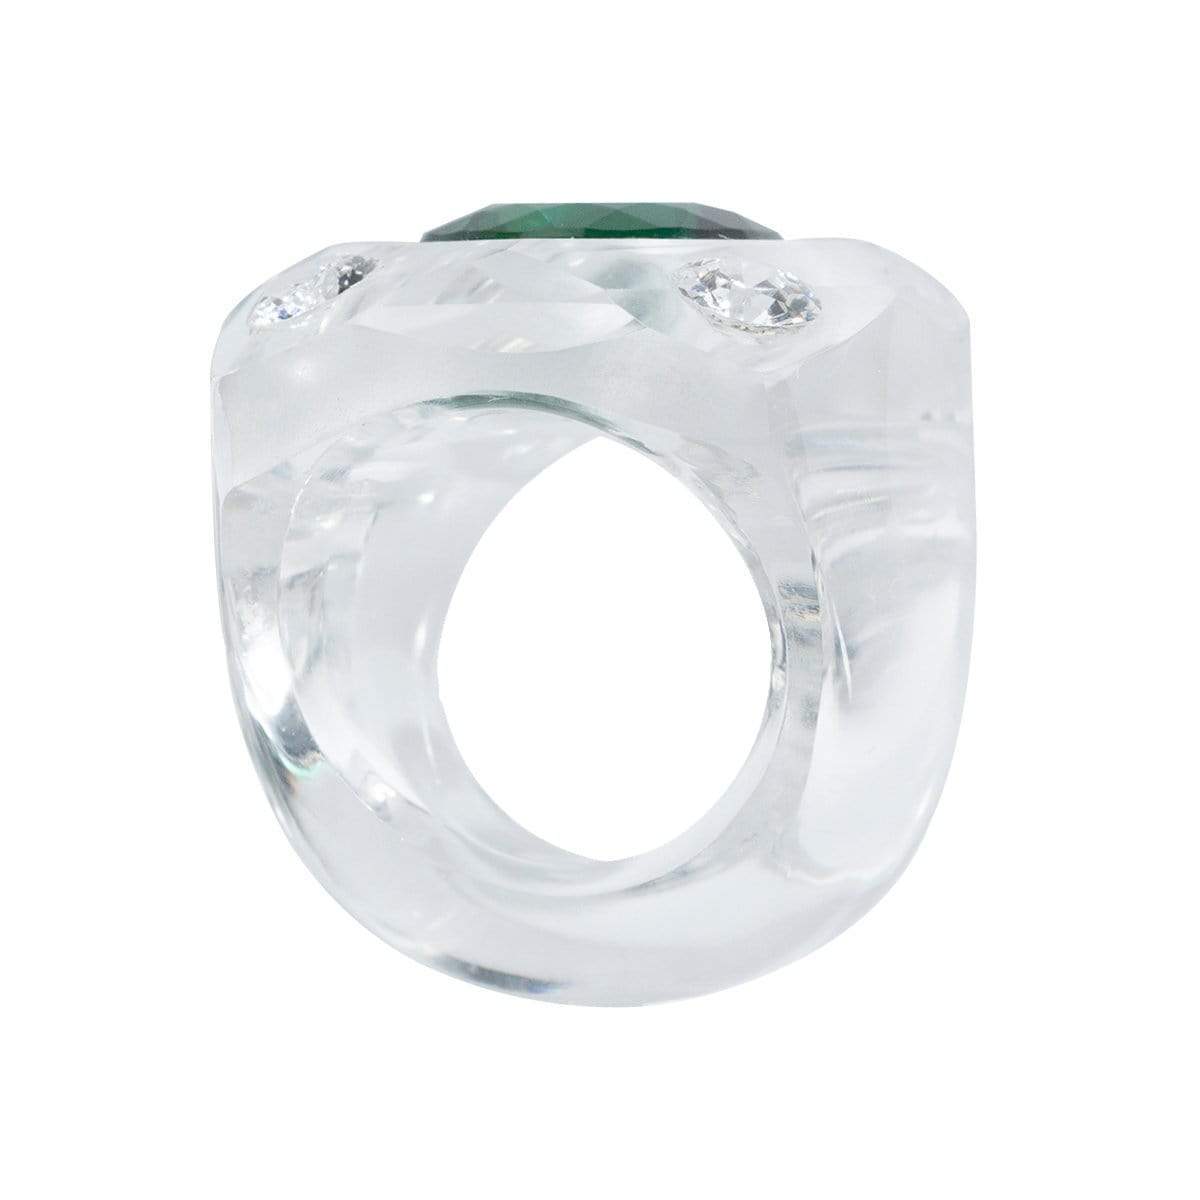 Crystal Cut Ring - Green Quartz + White Topaz